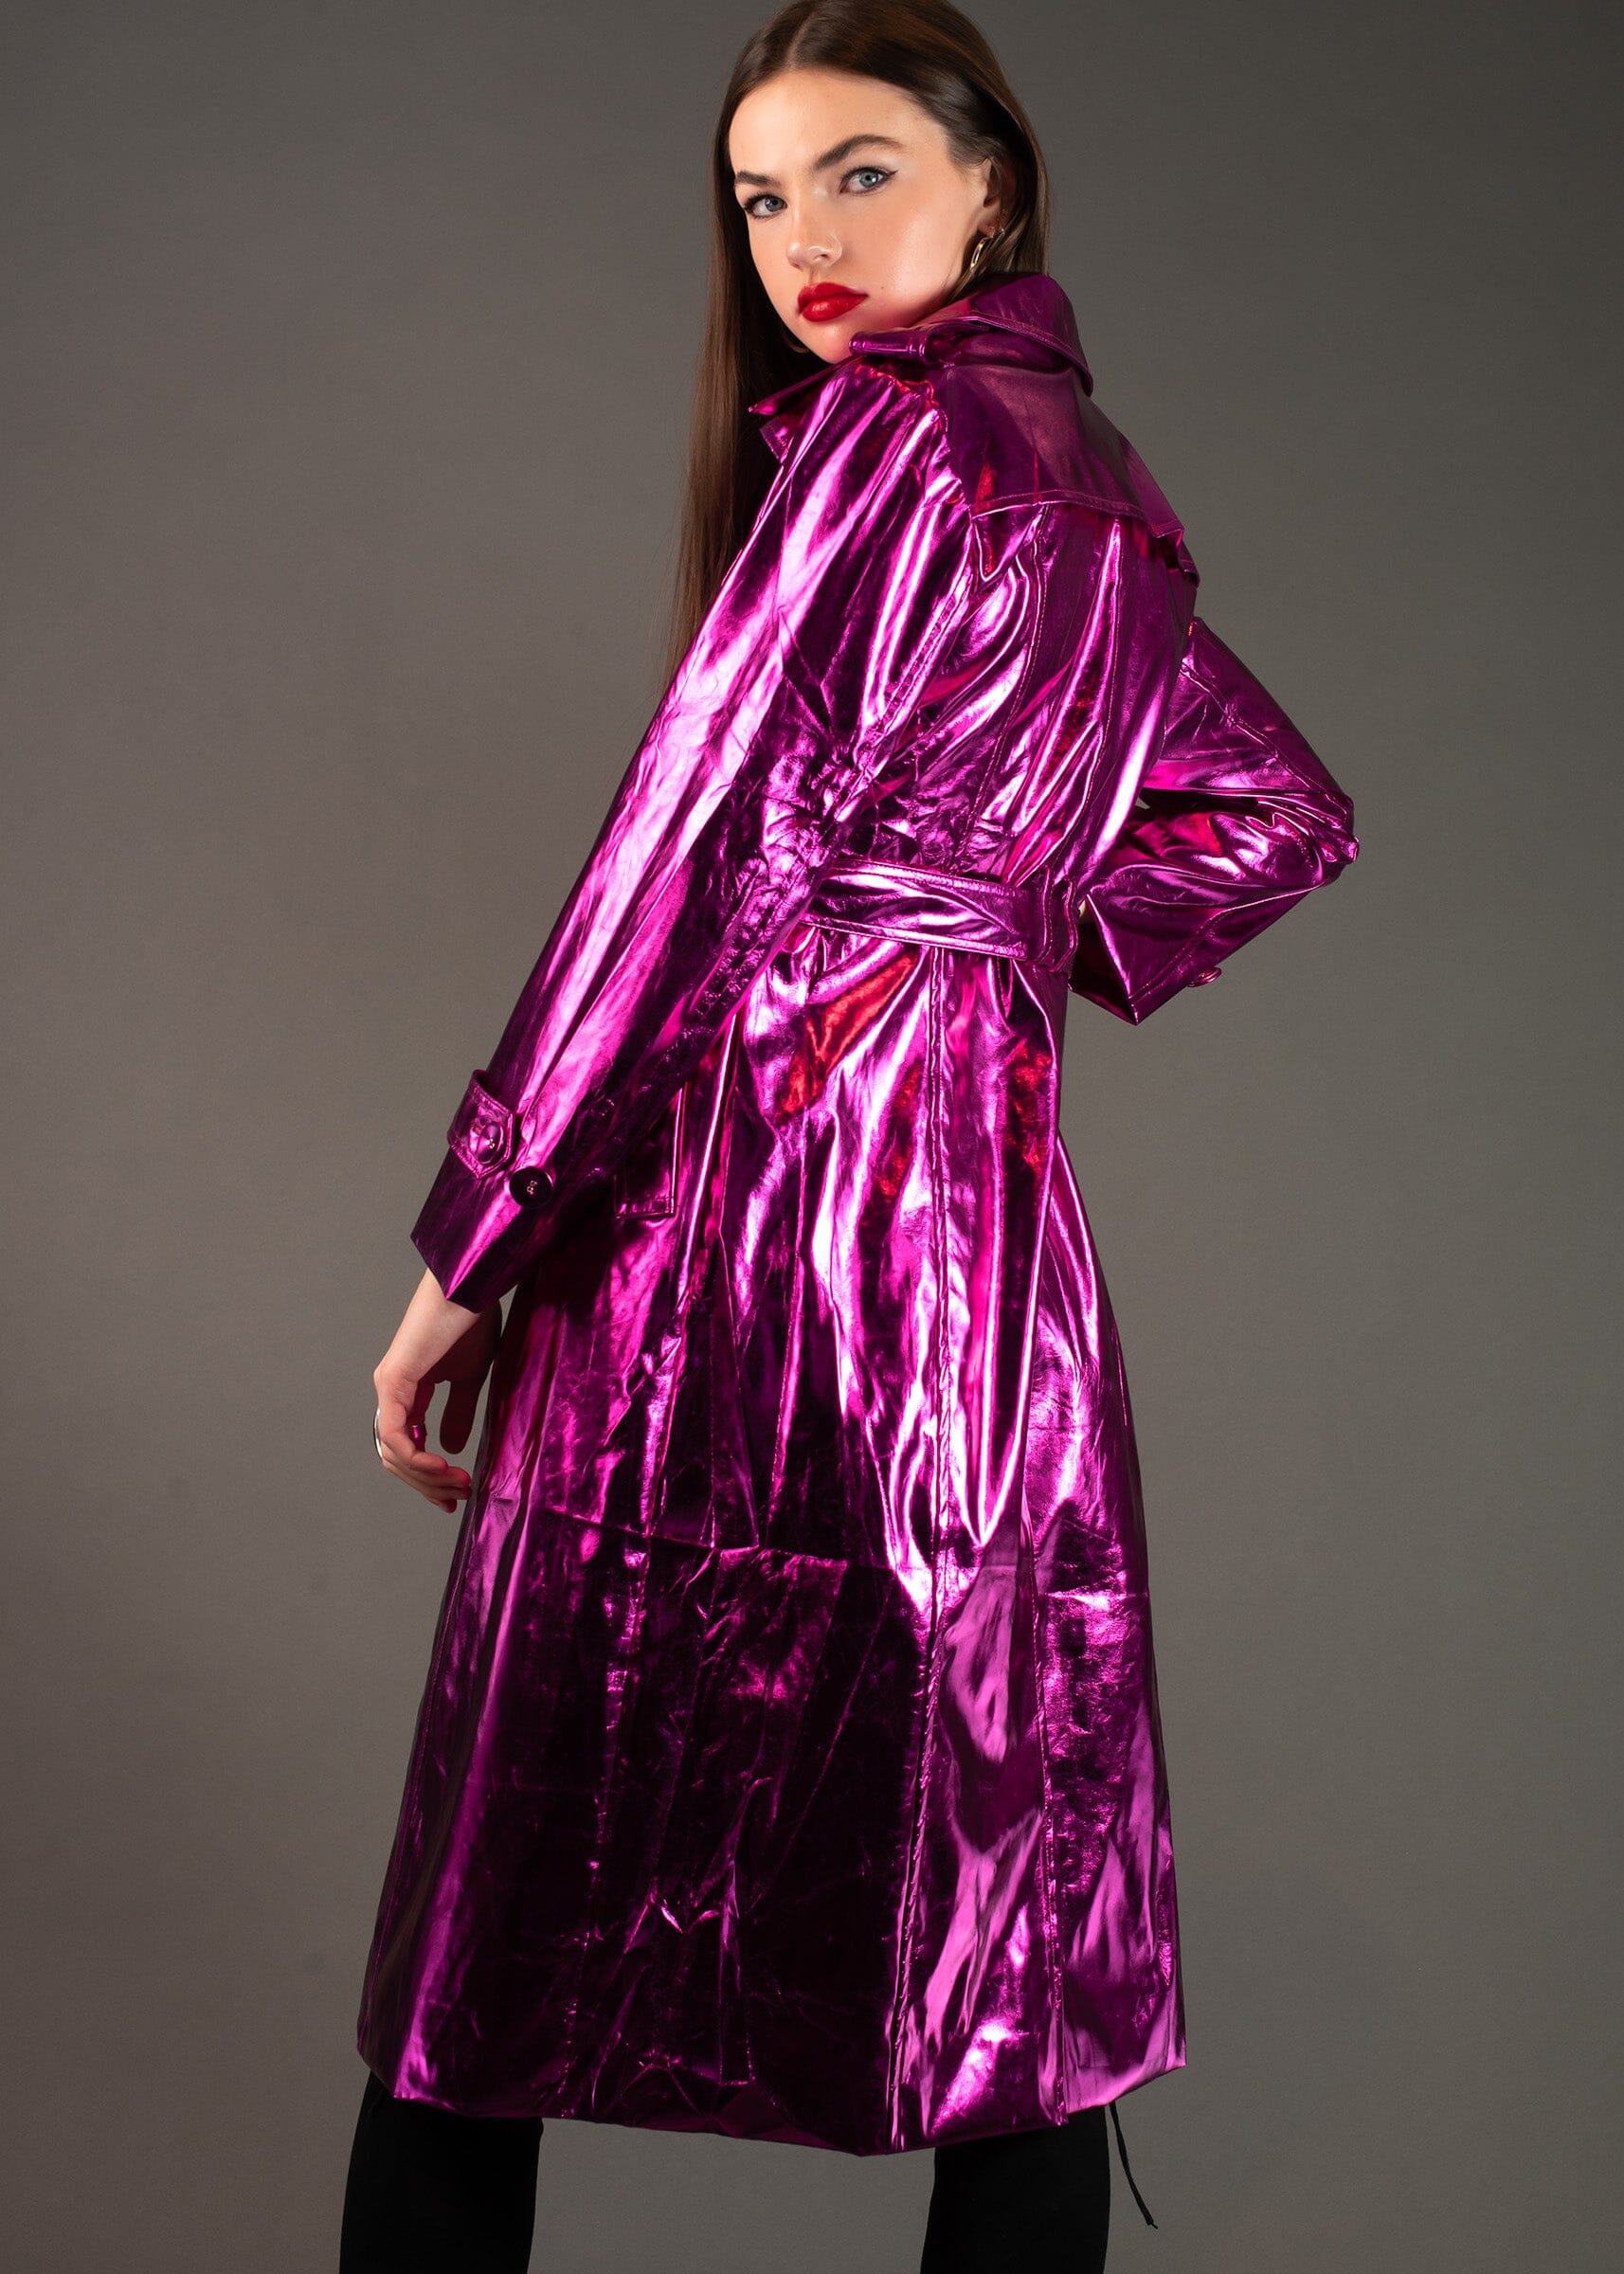 Hot Pink Metallic Trench Outerwear Kate Hewko 